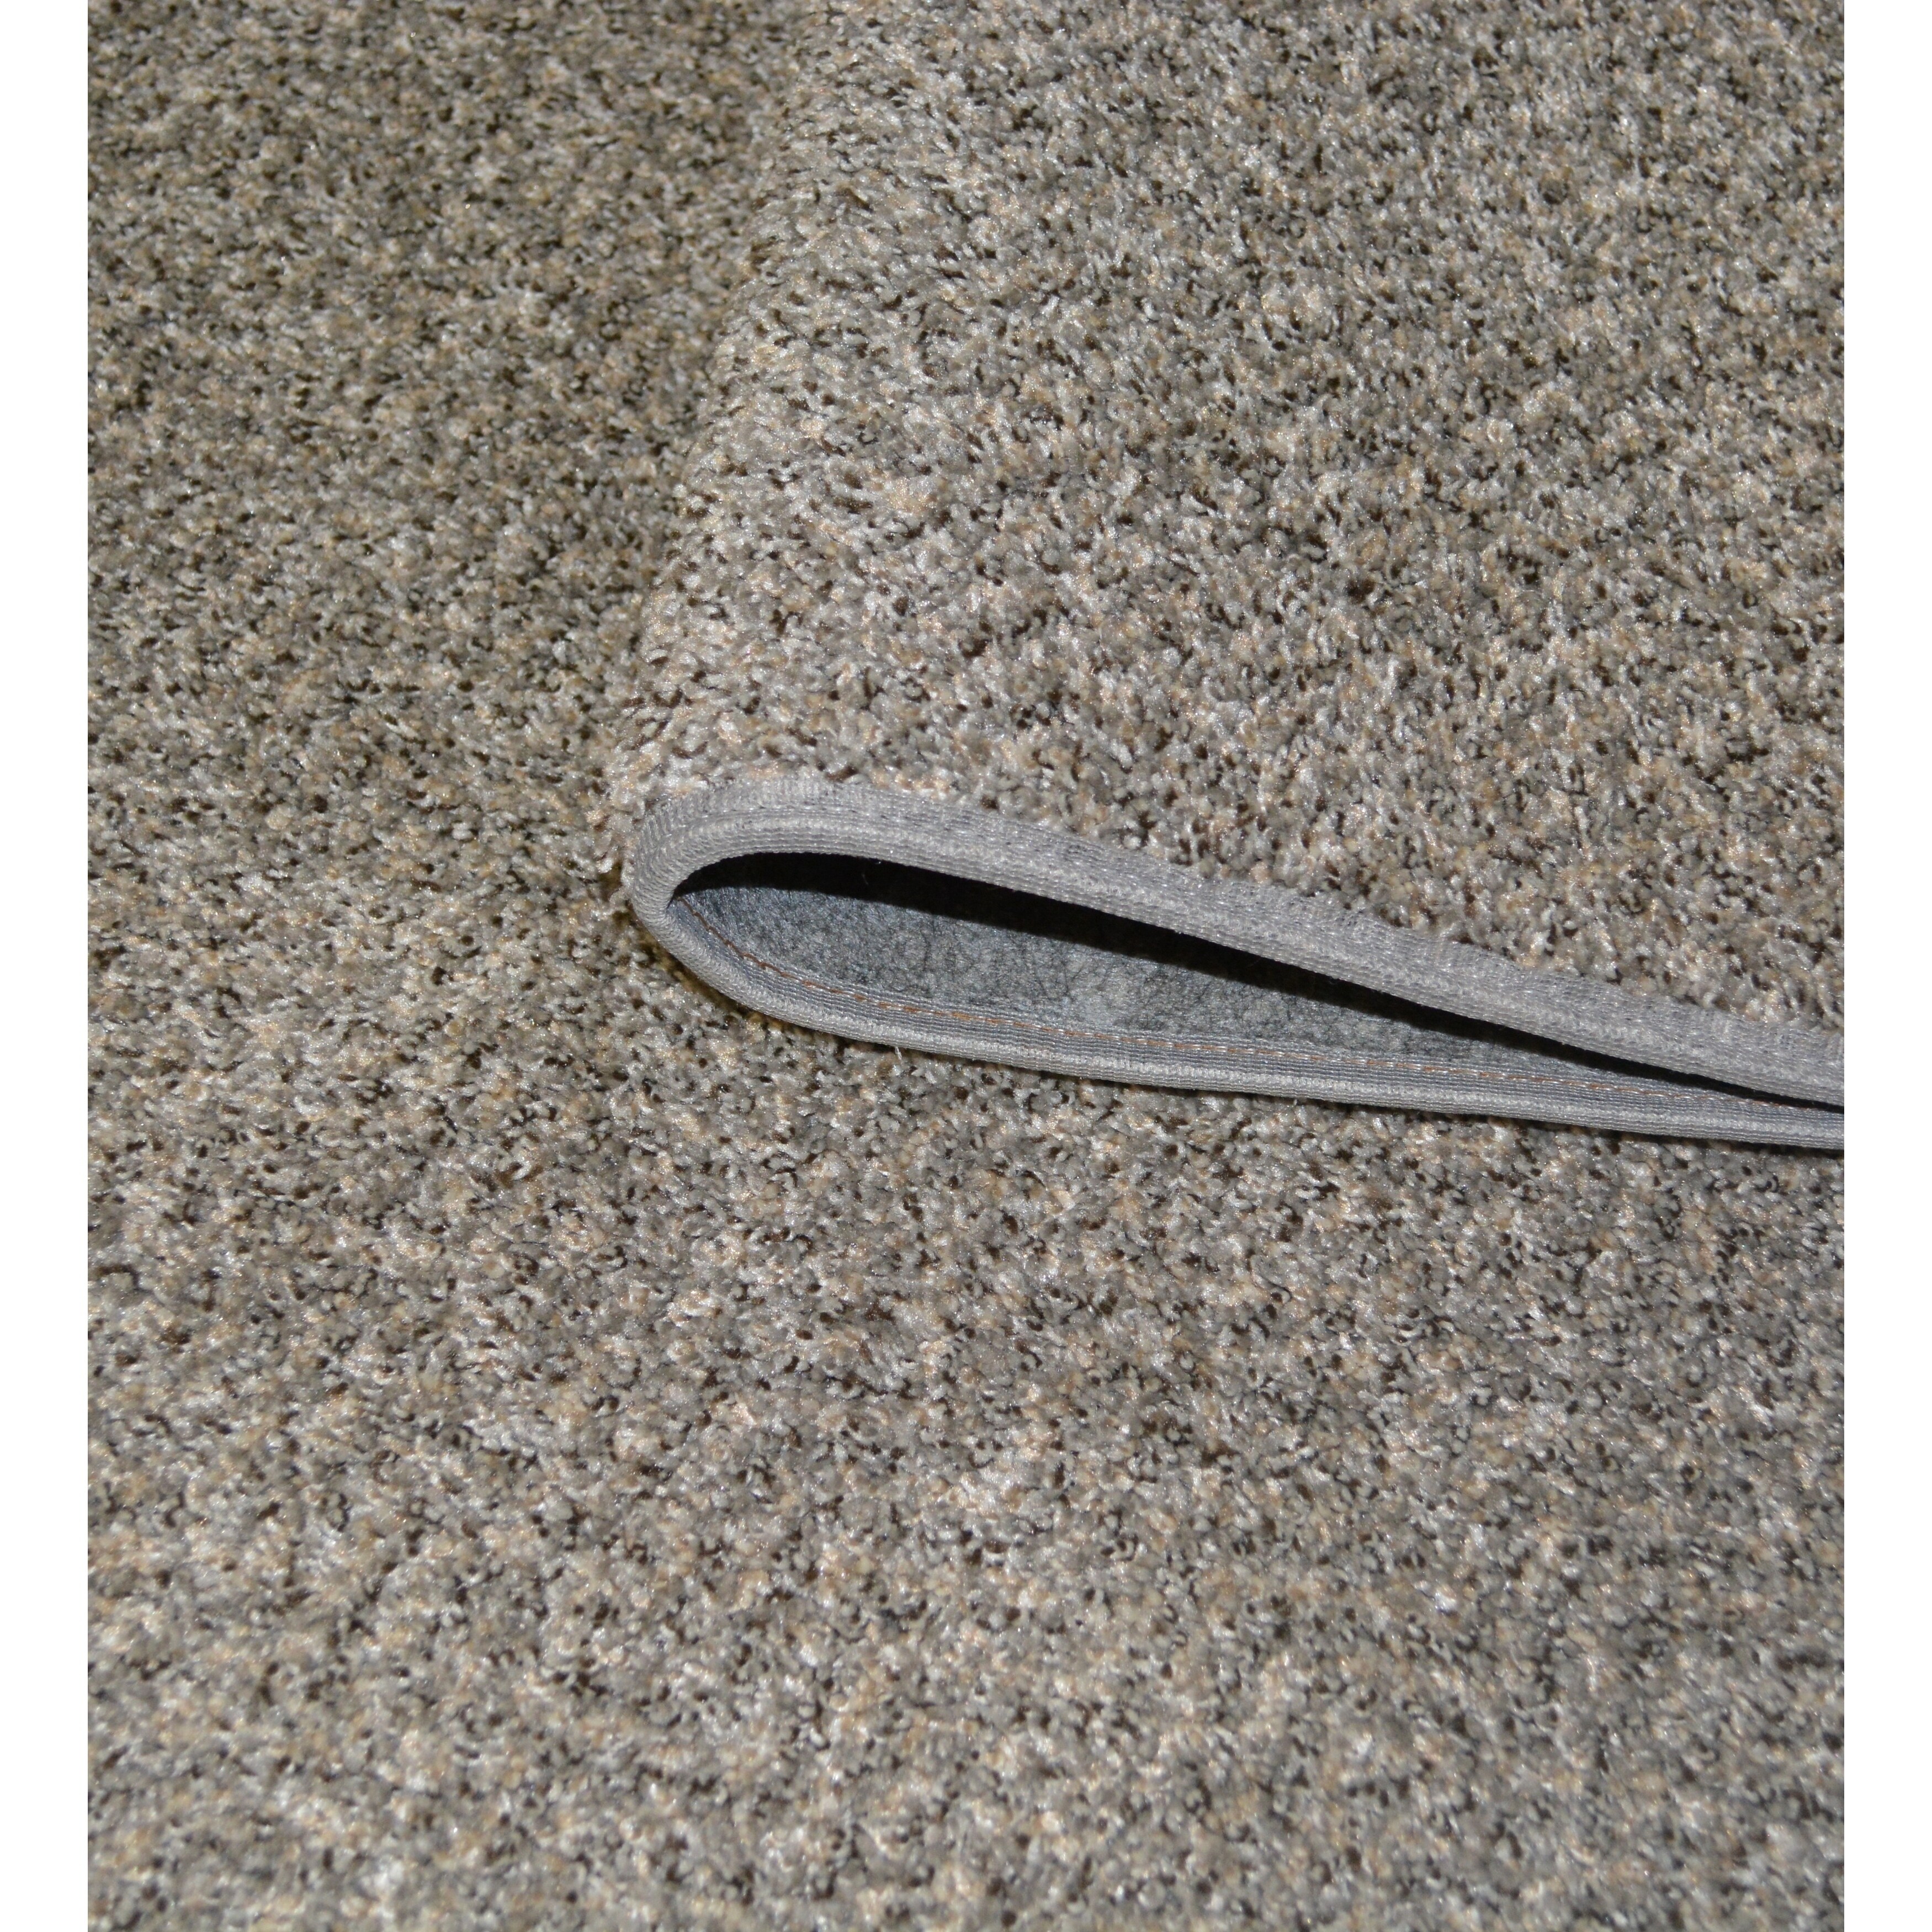 "SIMPLY SOFT" Plush Bound Carpet LARGE Area Rug Runner Beige Gray Custom Sizes 